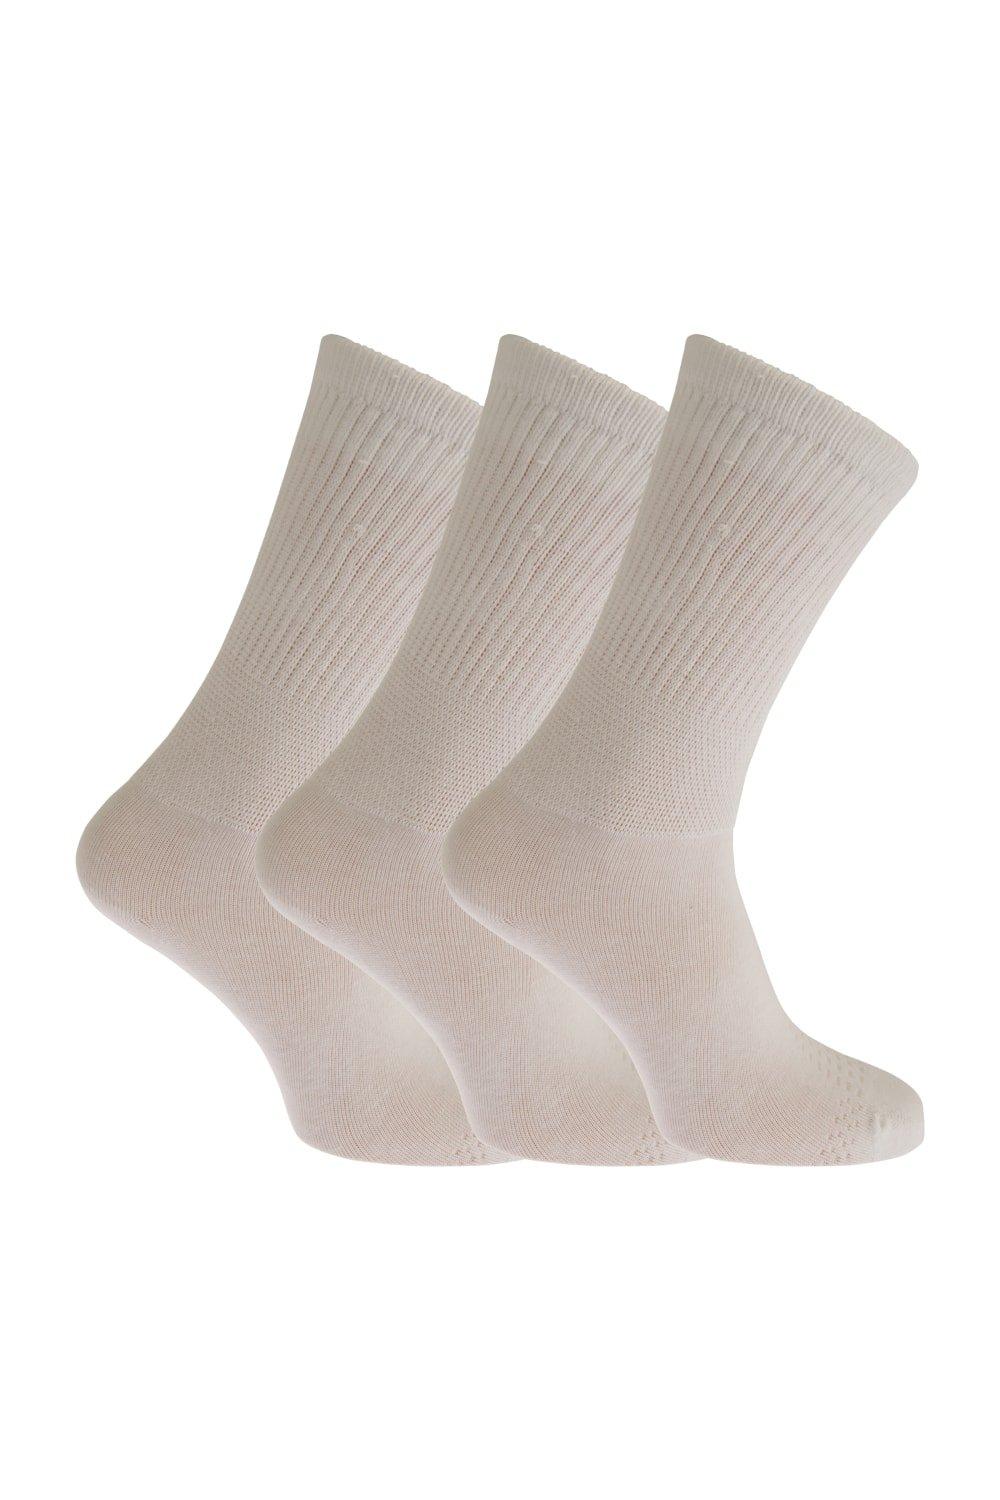 Extra Wide Comfort Fit Diabetic Socks (3 Pairs)